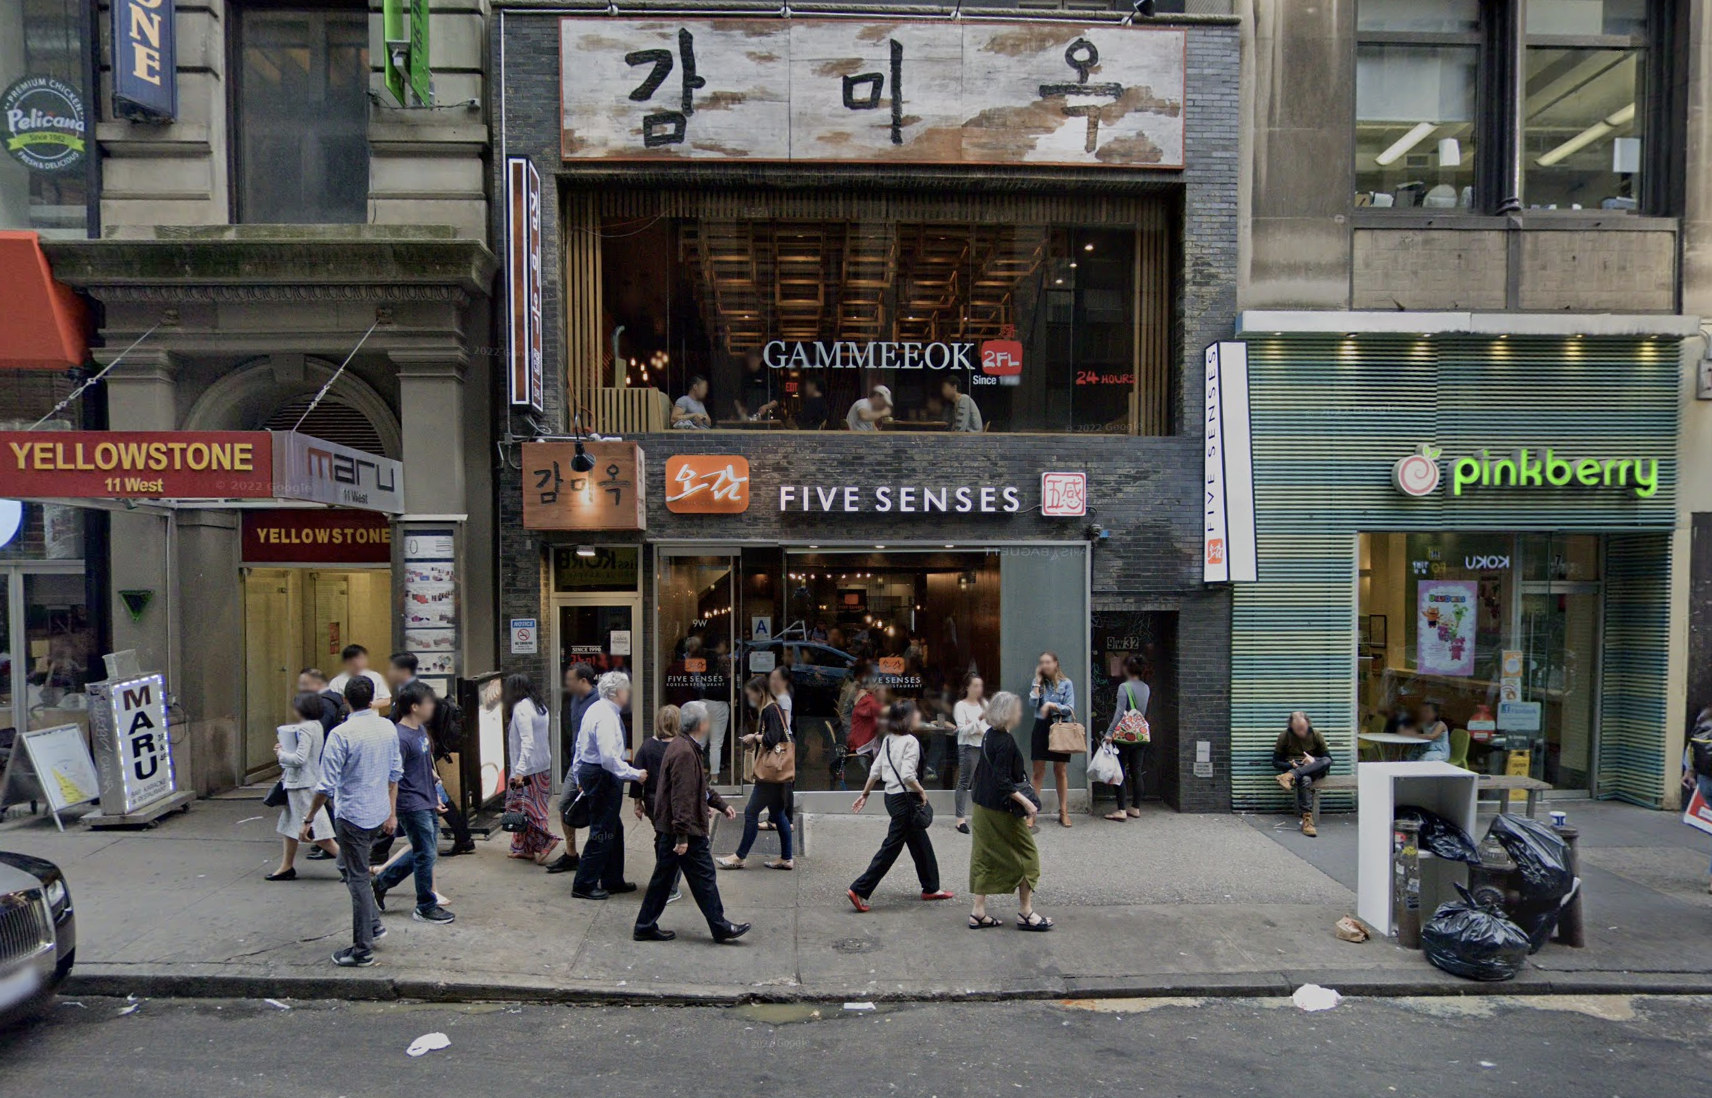 Pedestrians pass in front of Gammeeok, a restaurant in Koreatown, in a screenshot from Google Maps.